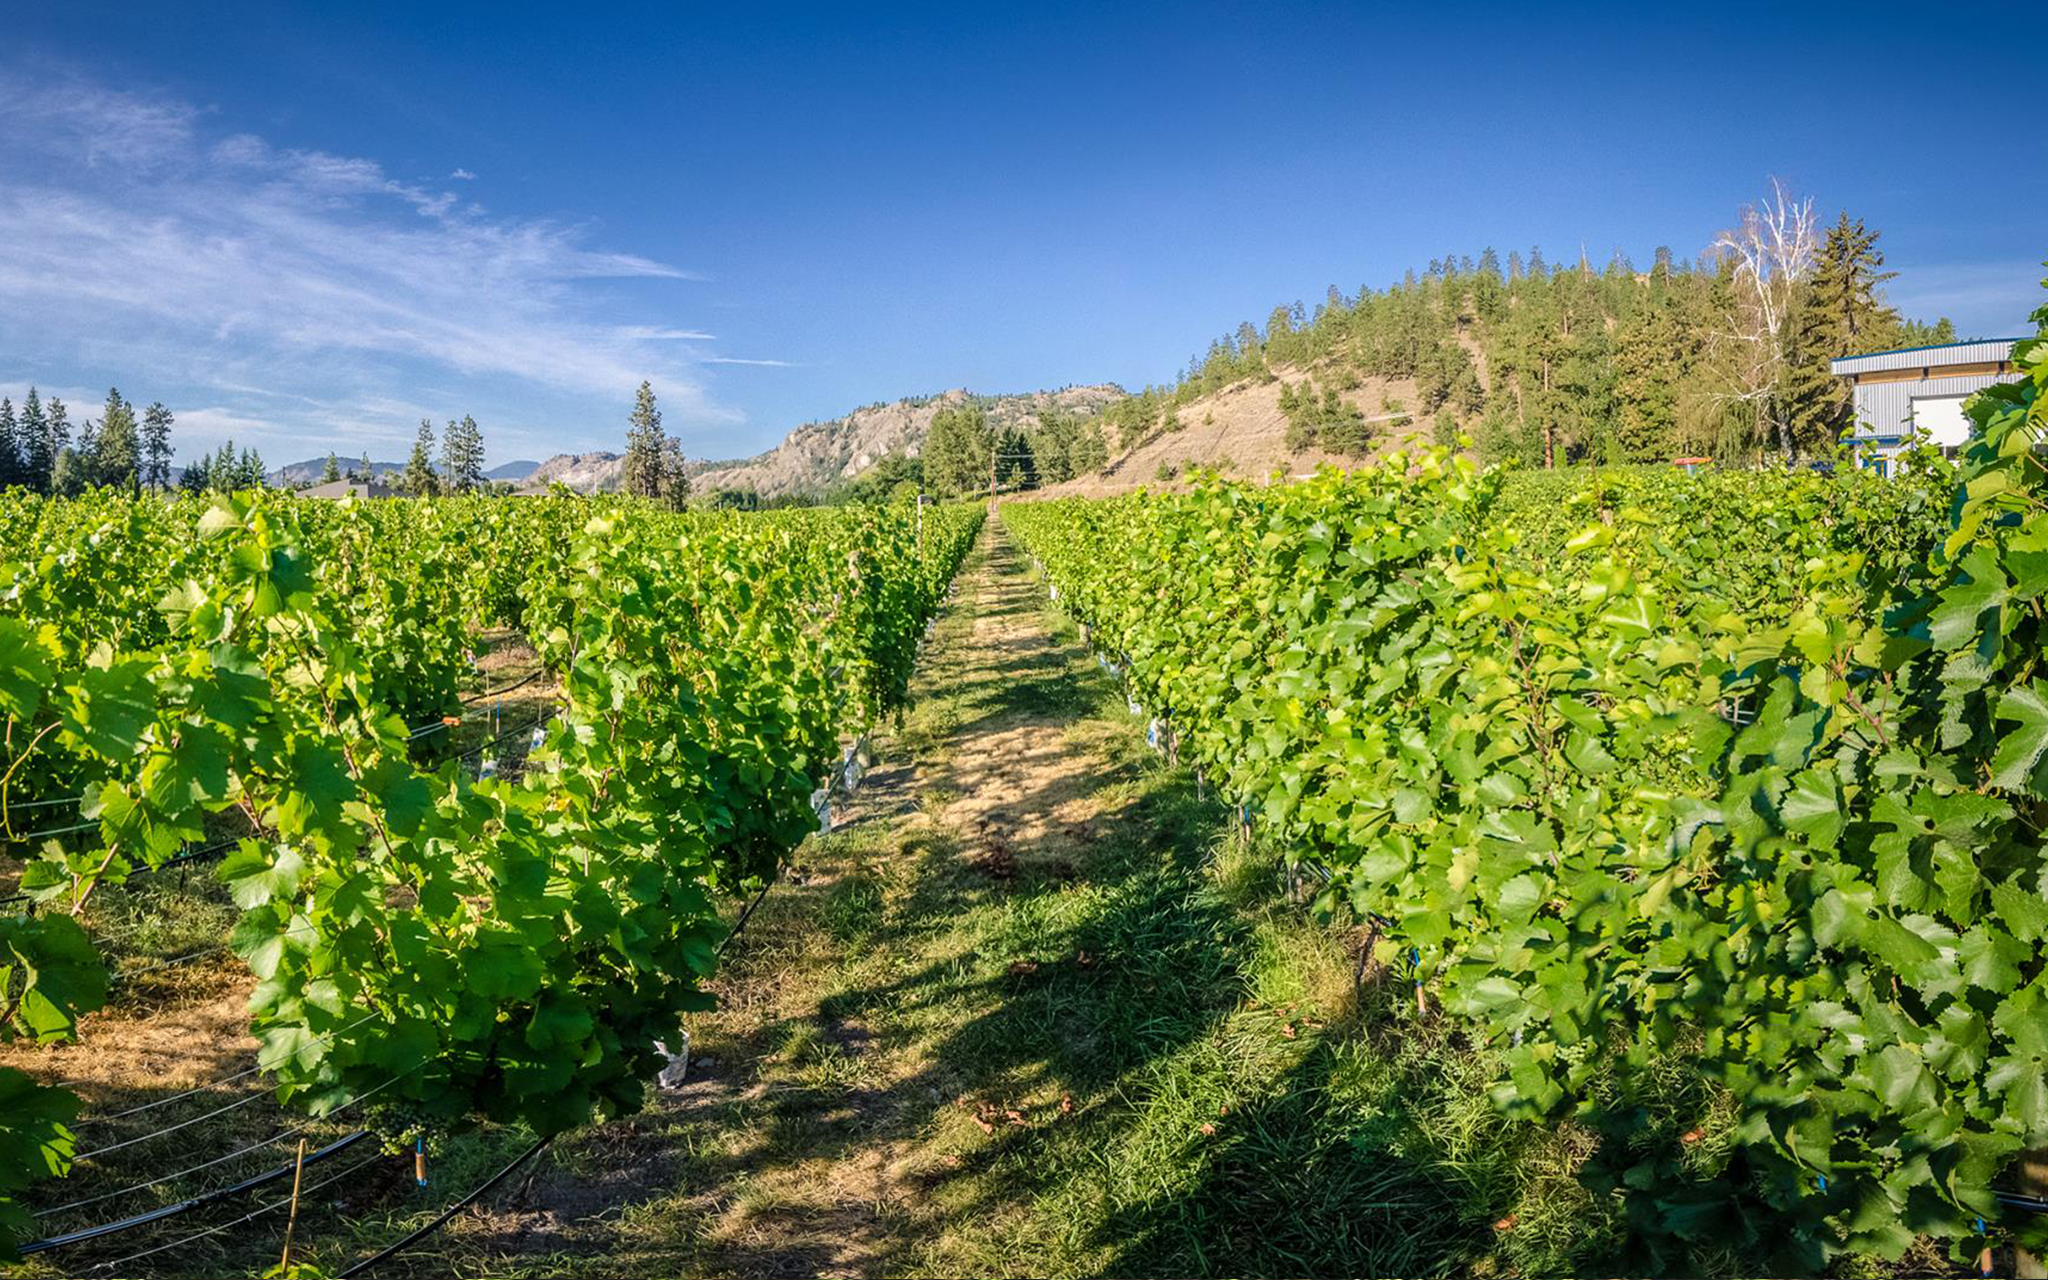 Pipe Dreams Vineyard and Estate Winery